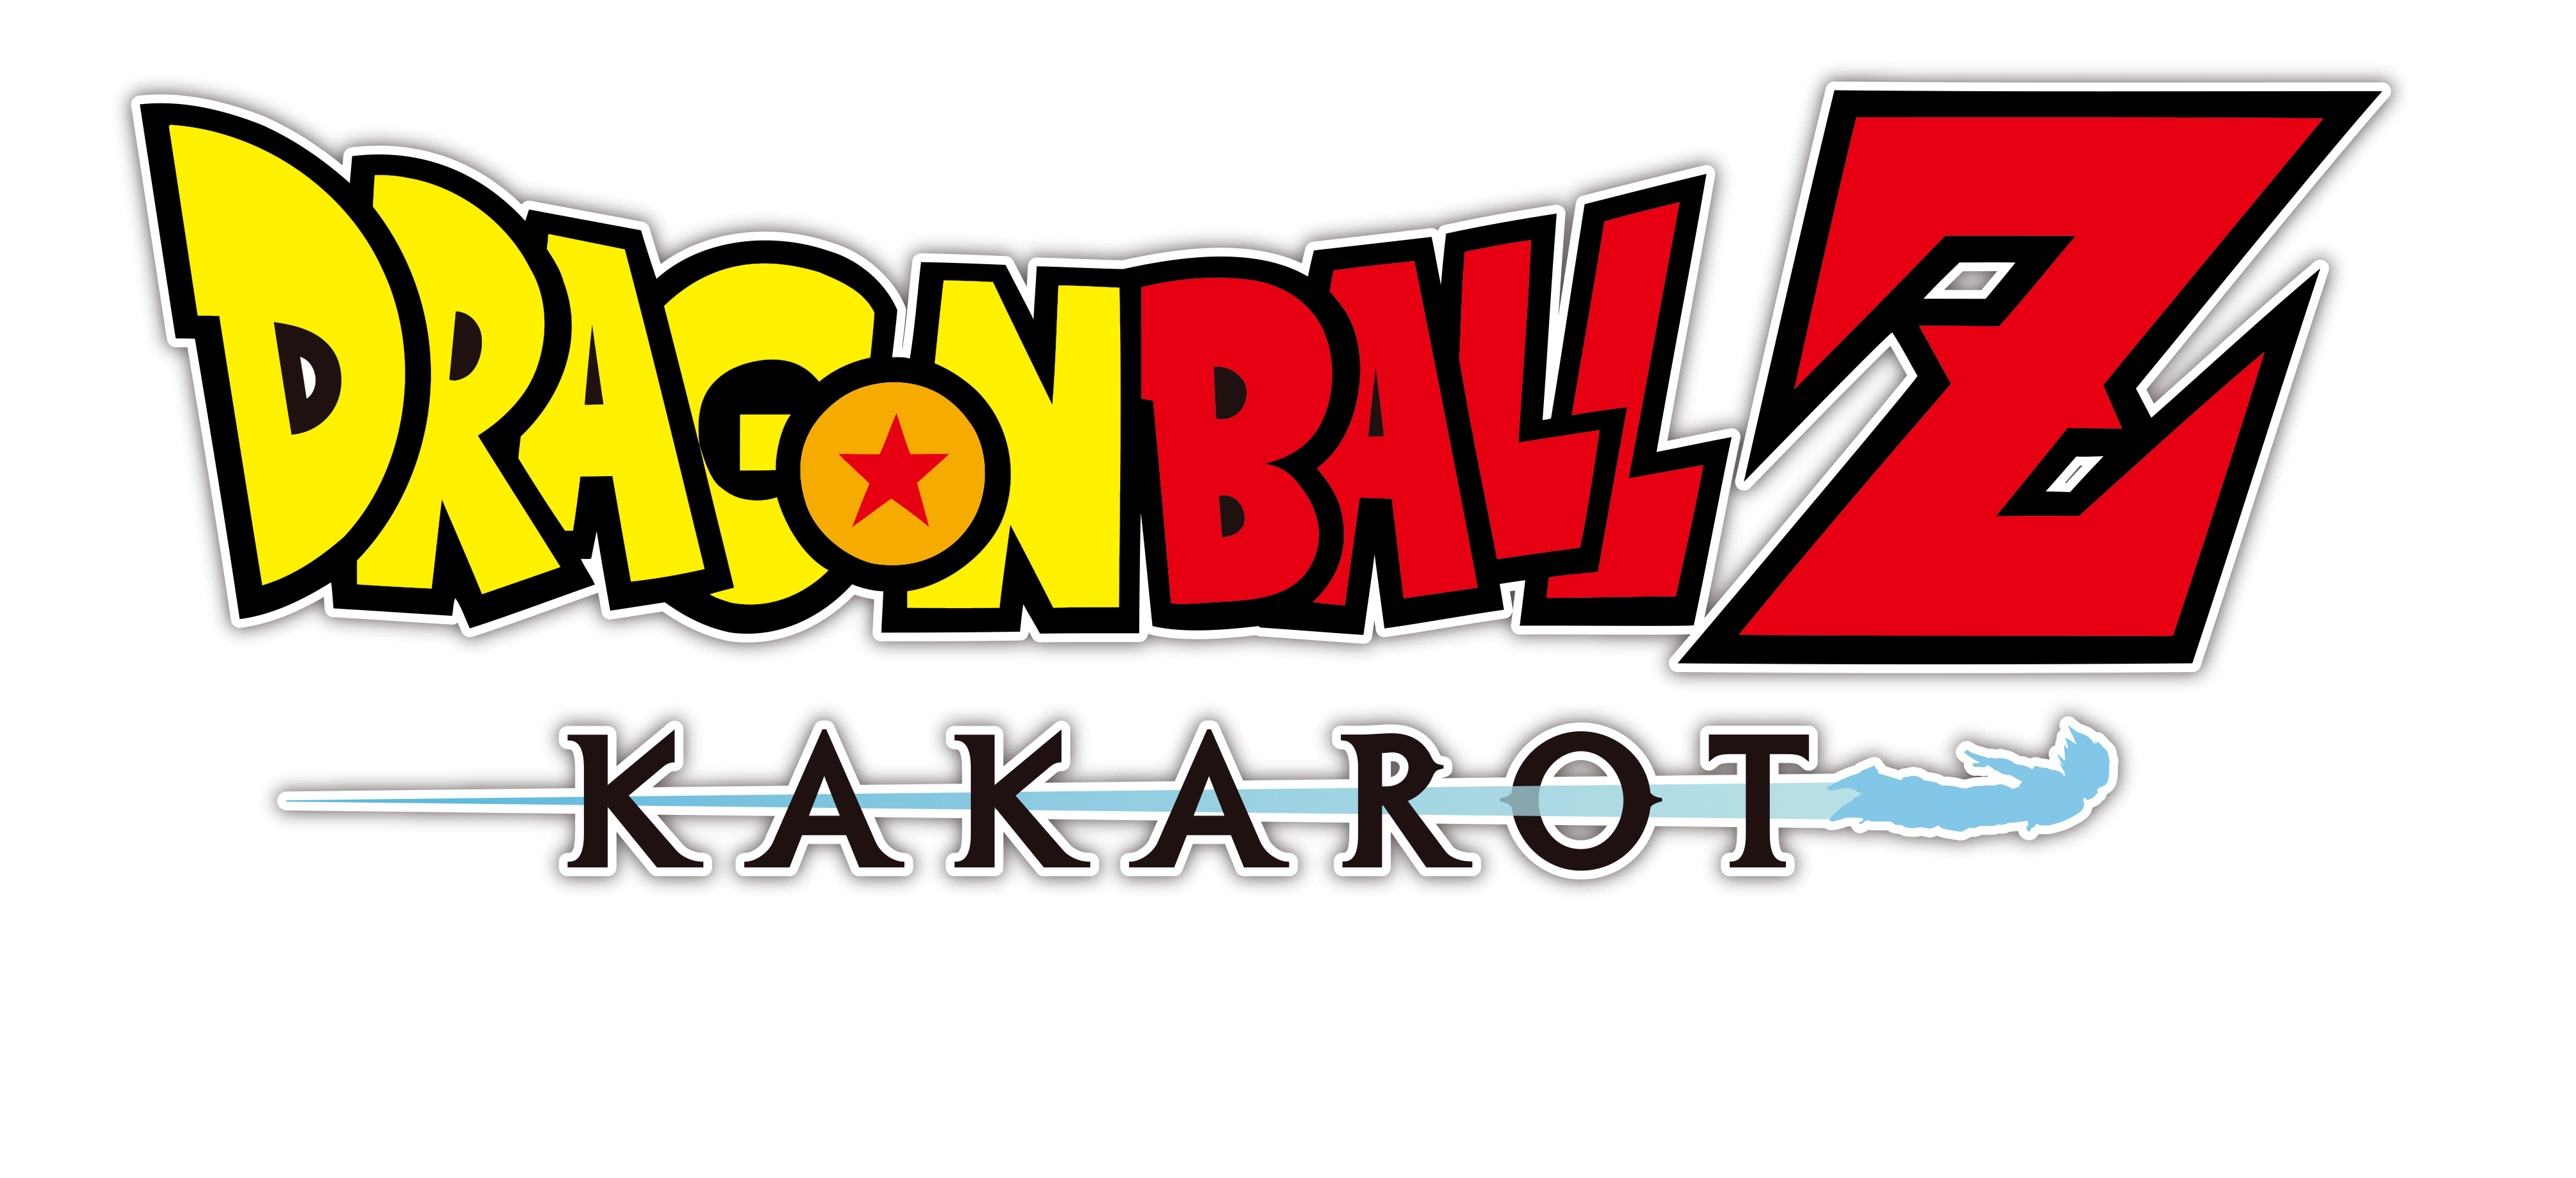 DRAGON BALL Z : KAKAROT + A NEW POWER AWAKENS SET